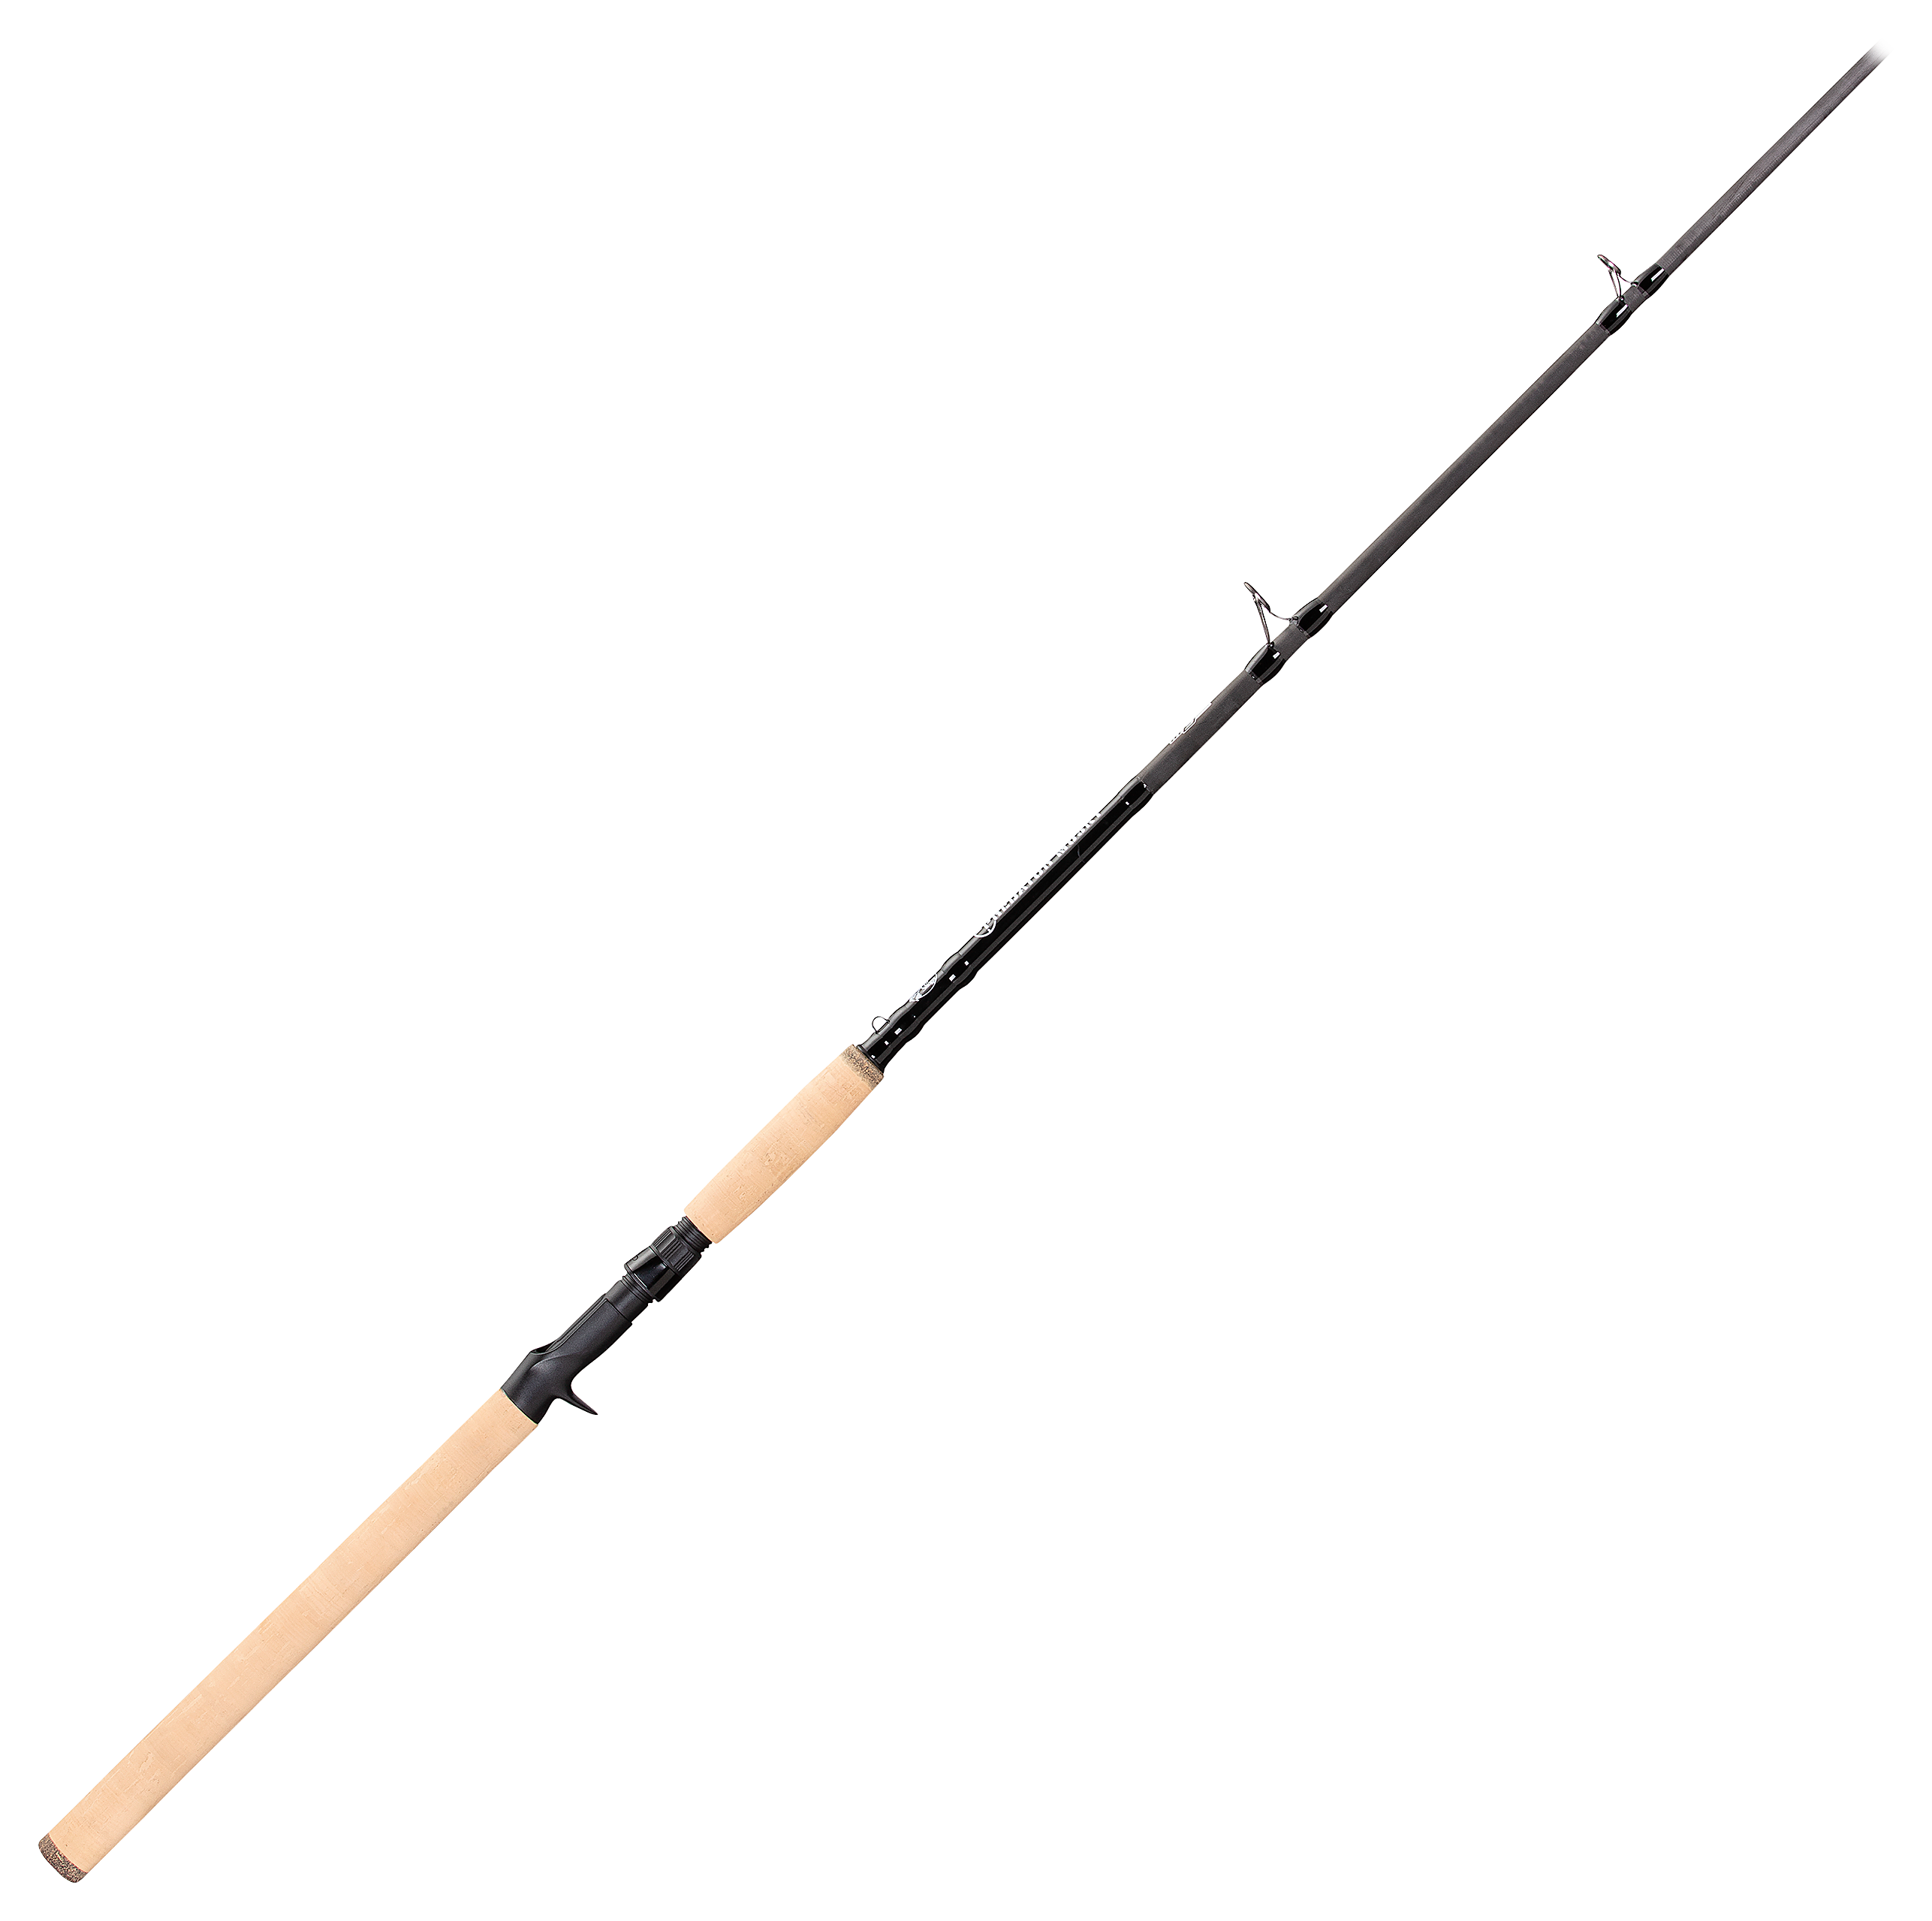 Okuma SST a Cork Grip Rods Spinning 6' 6 T0 8' 0 CHOOSE YOUR MODEL!